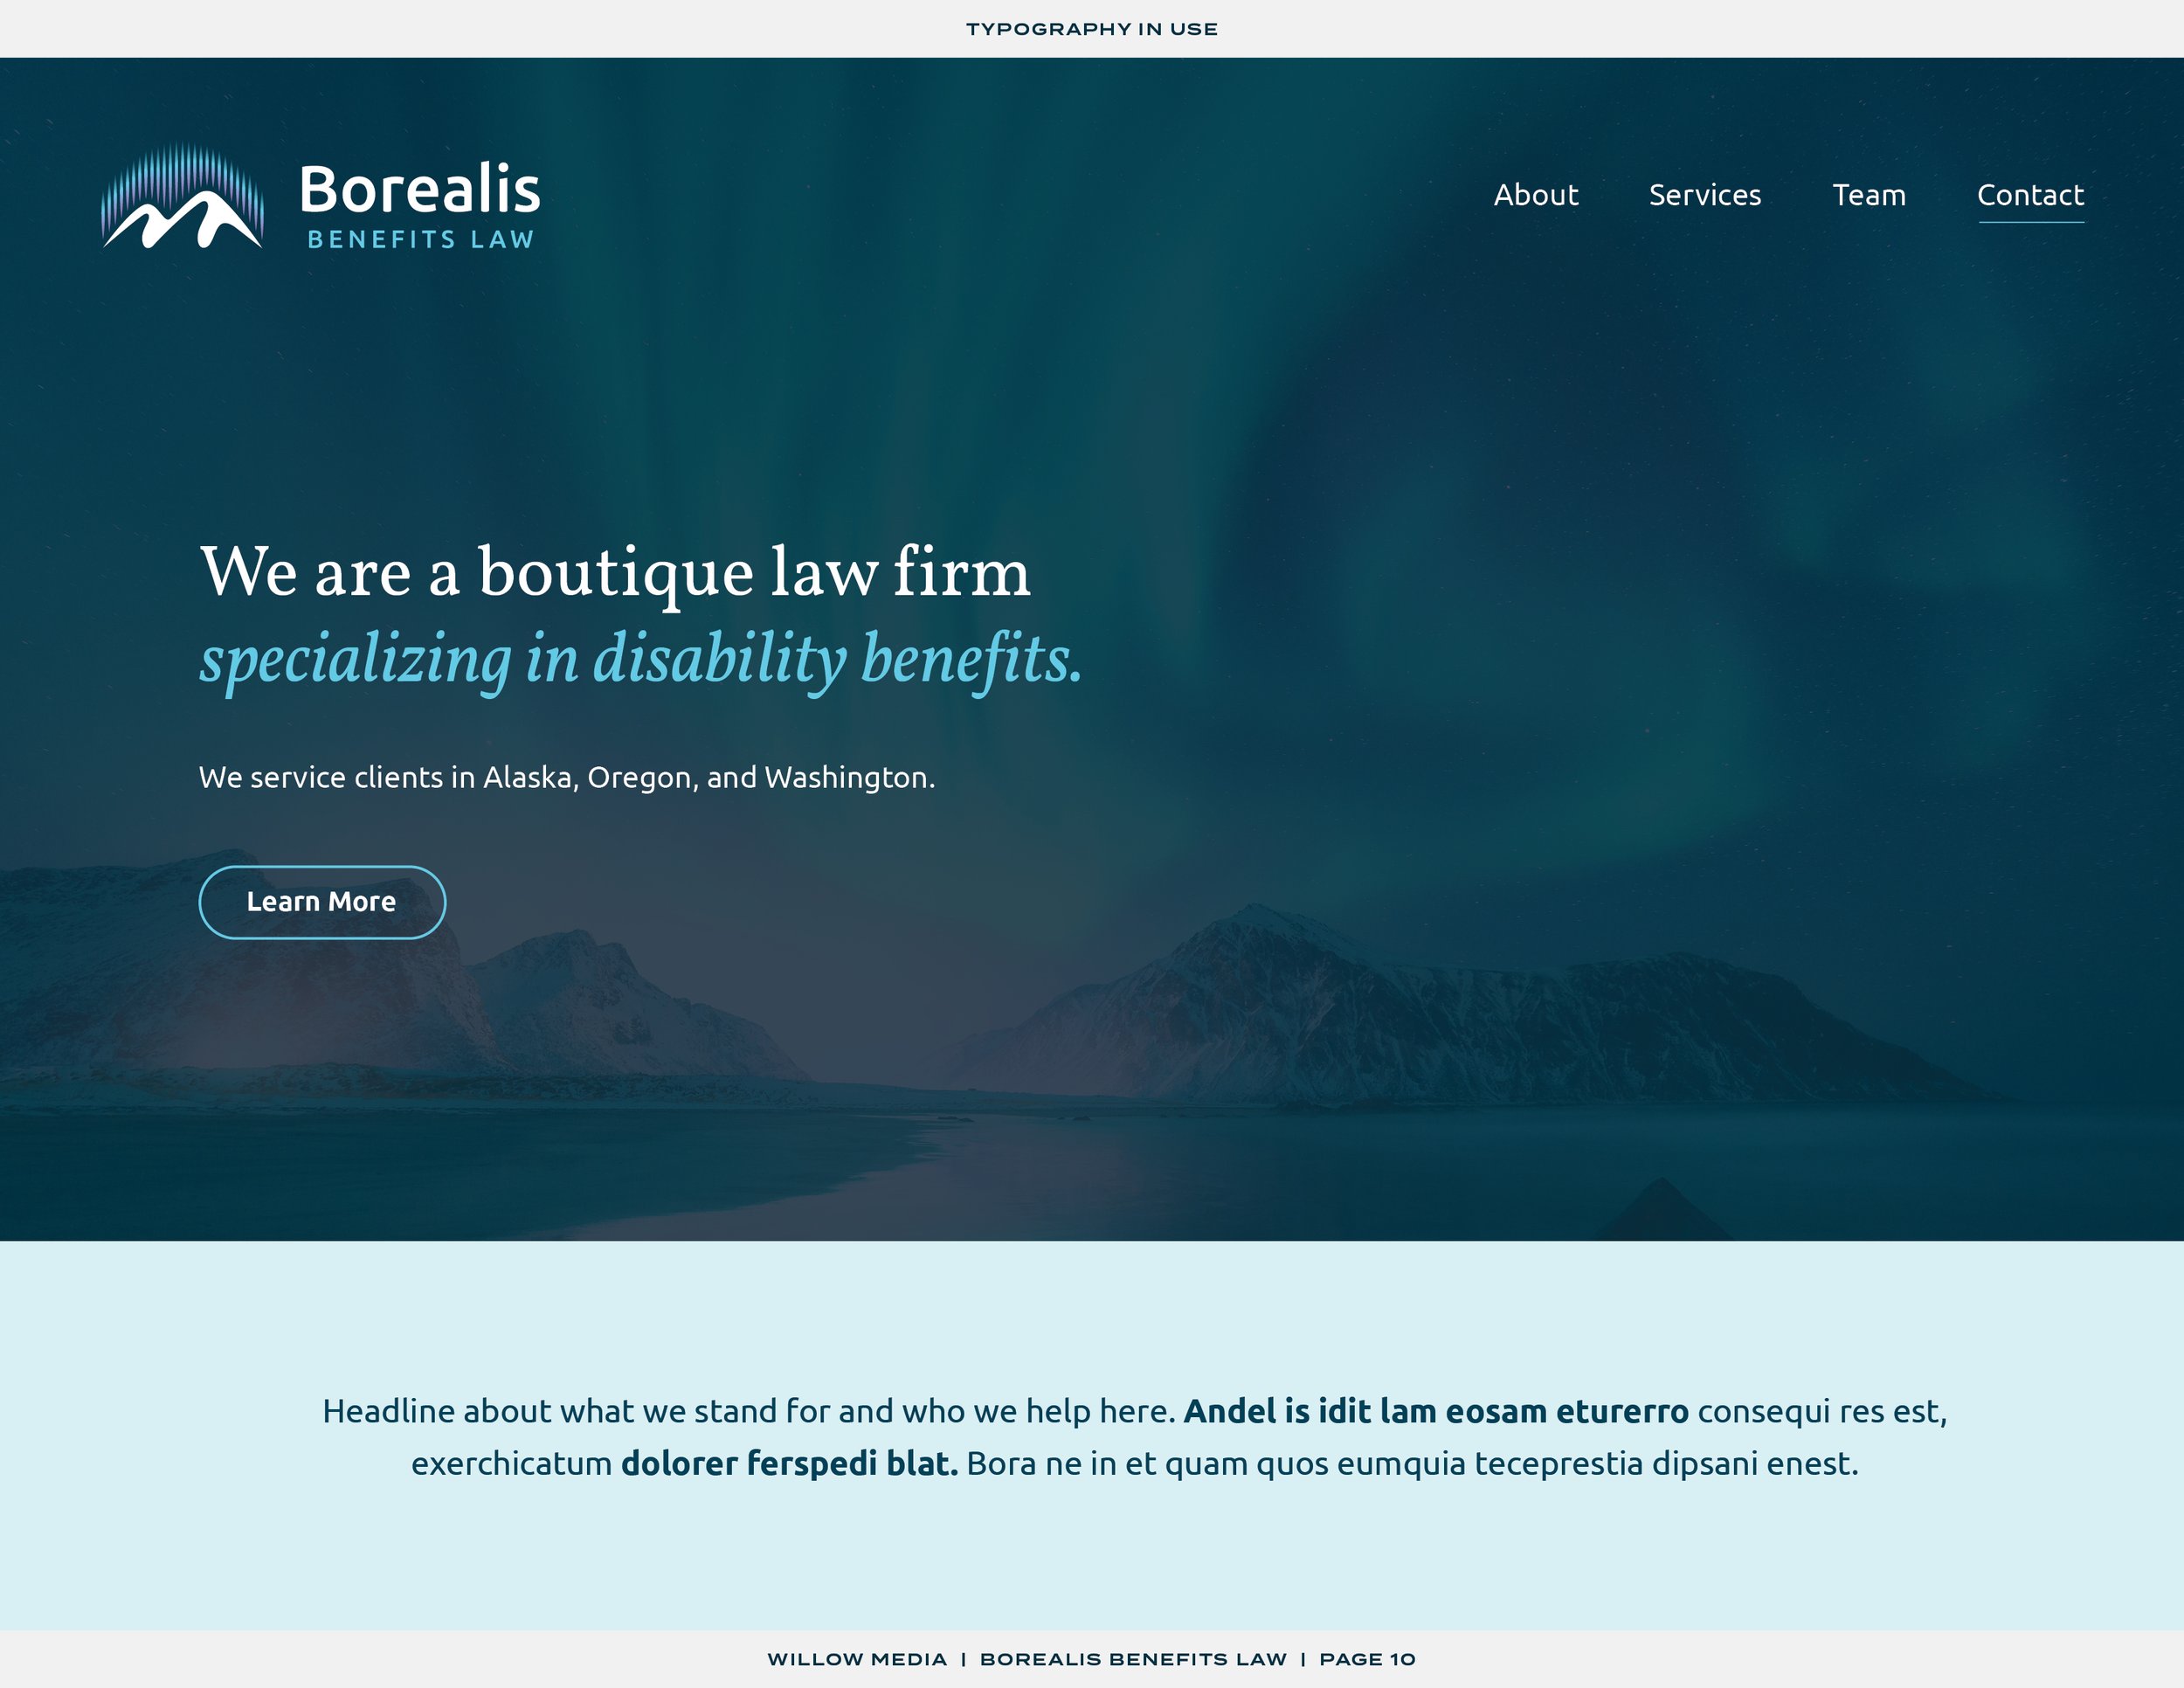 Borealis Benefits Law Brand Presentation | Willow Media10.jpg